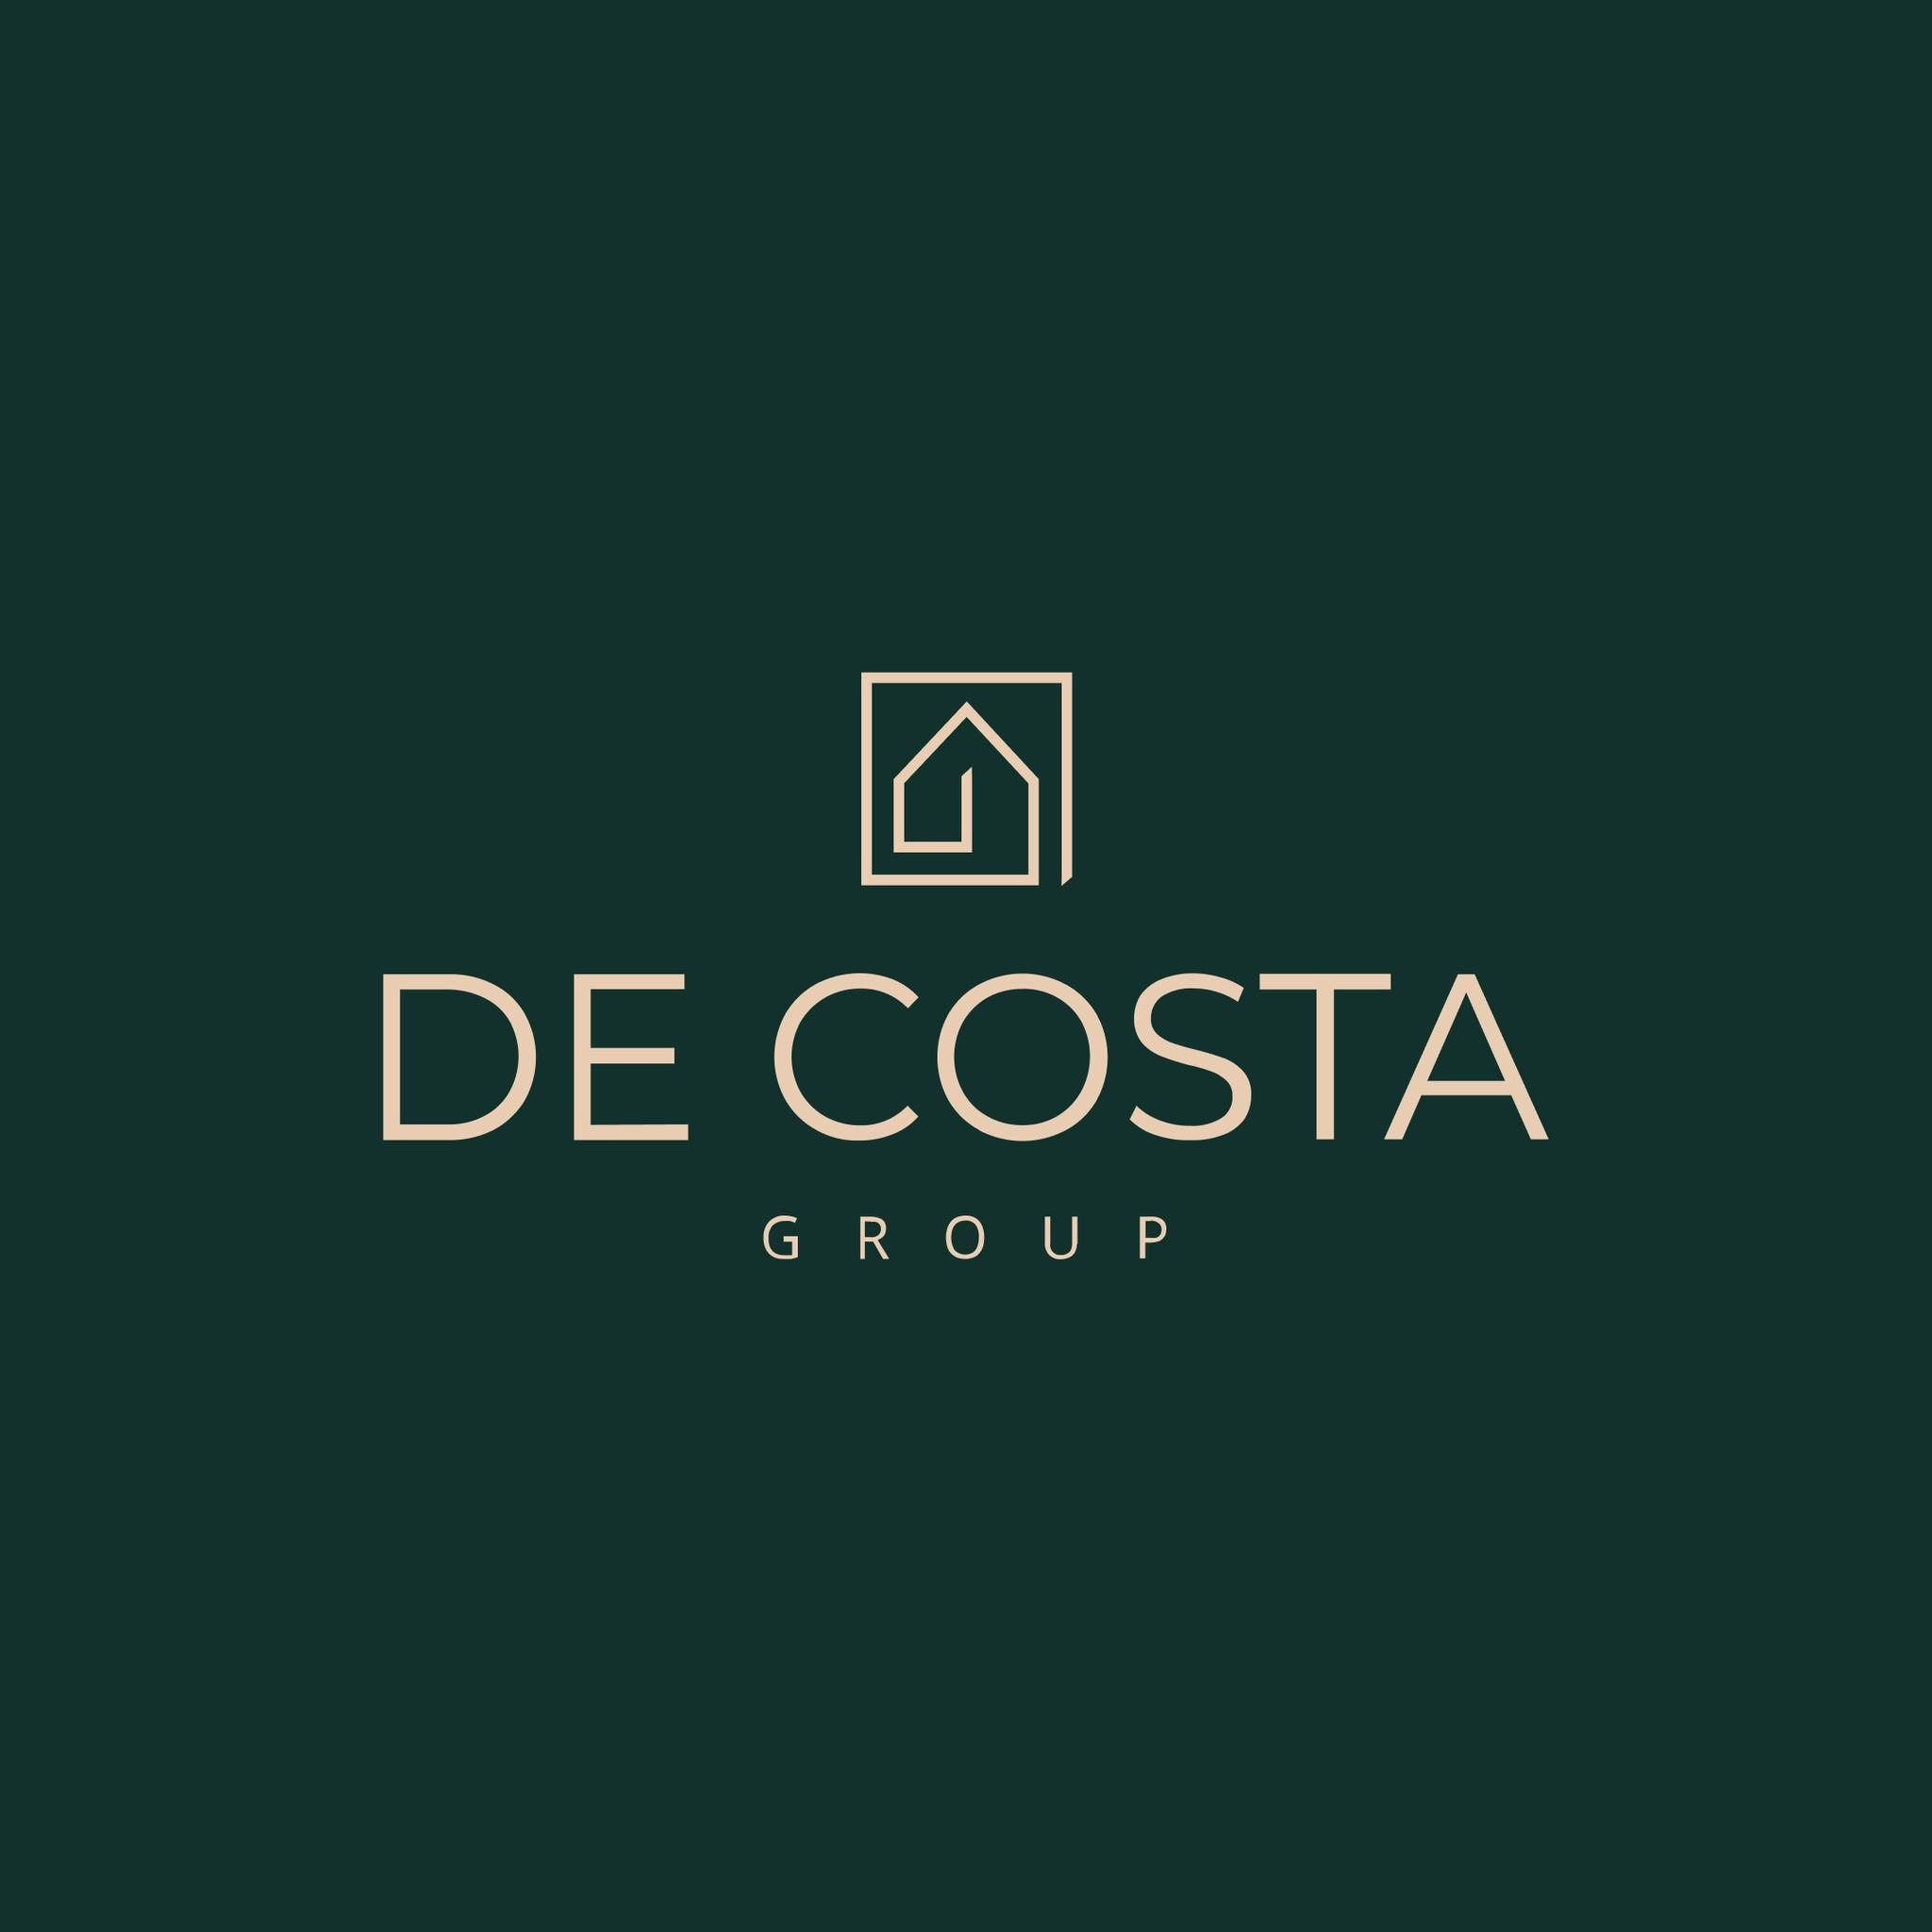 De Costa Group